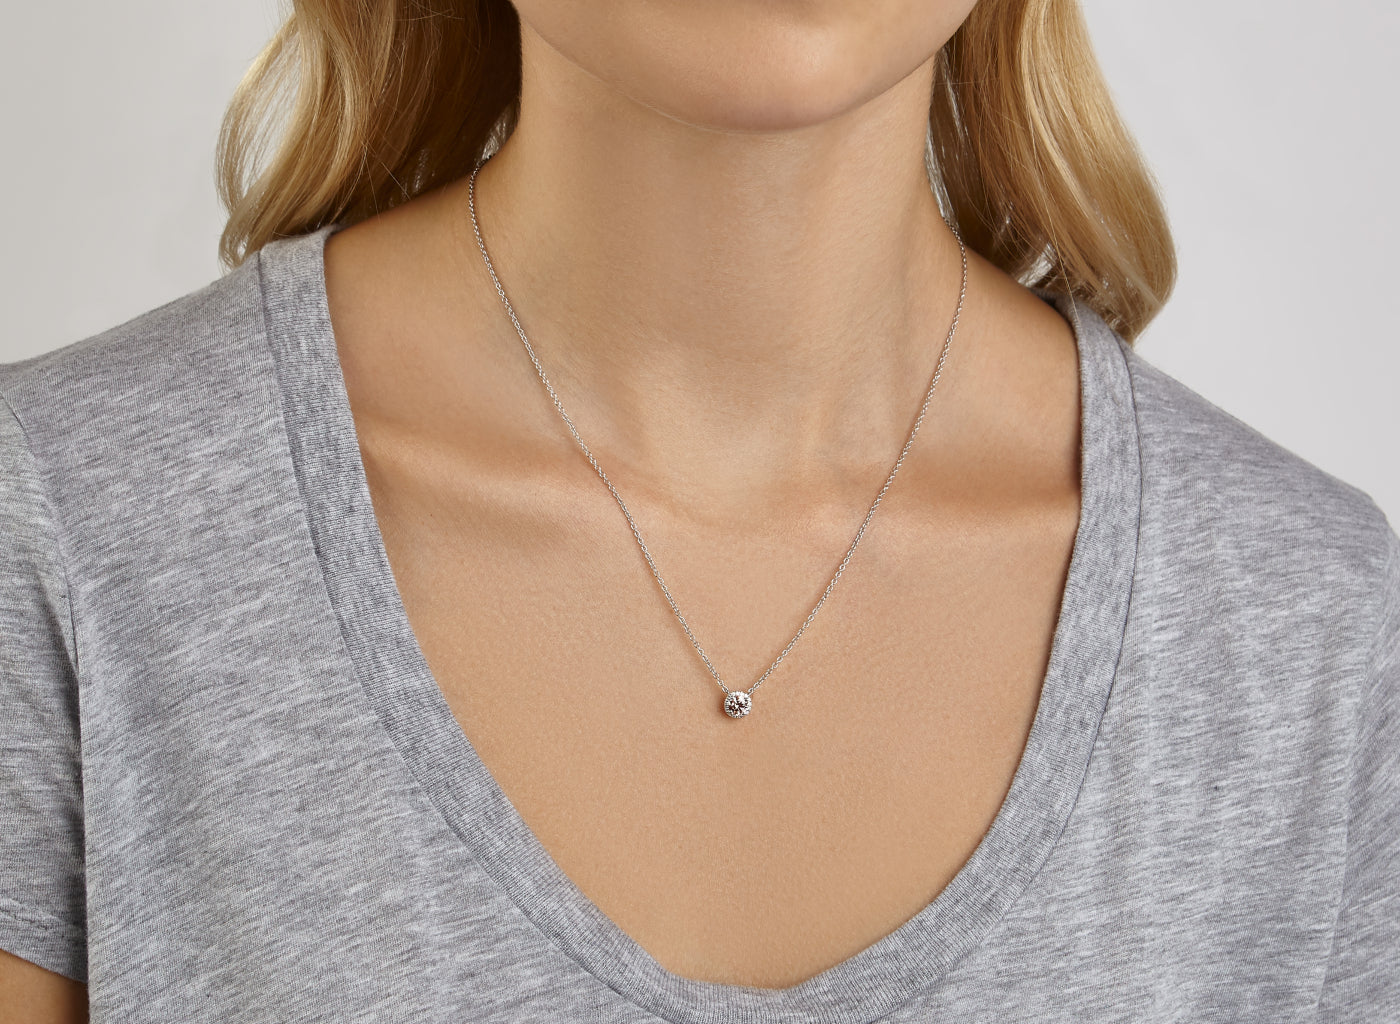 The 5 Diamond Necklace with 0.75 Carats | Noémie